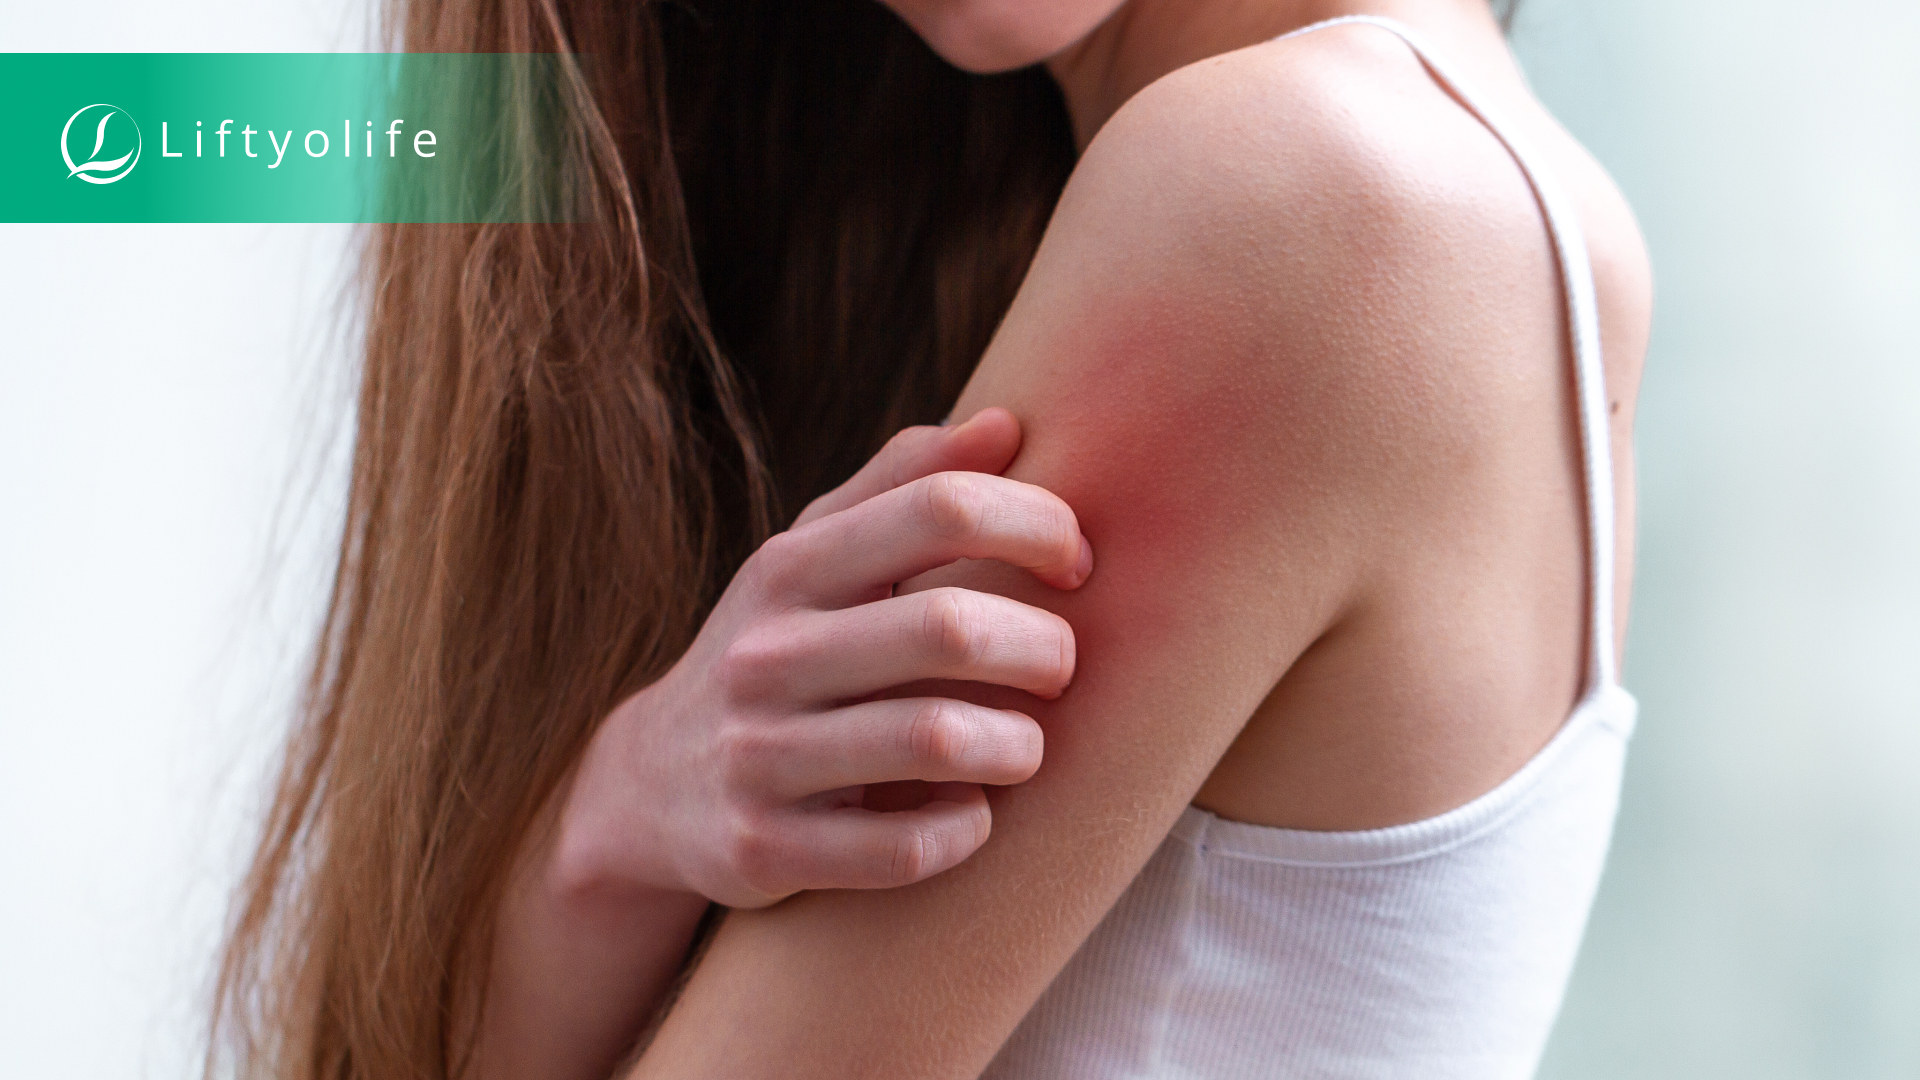 What is dermatitis?